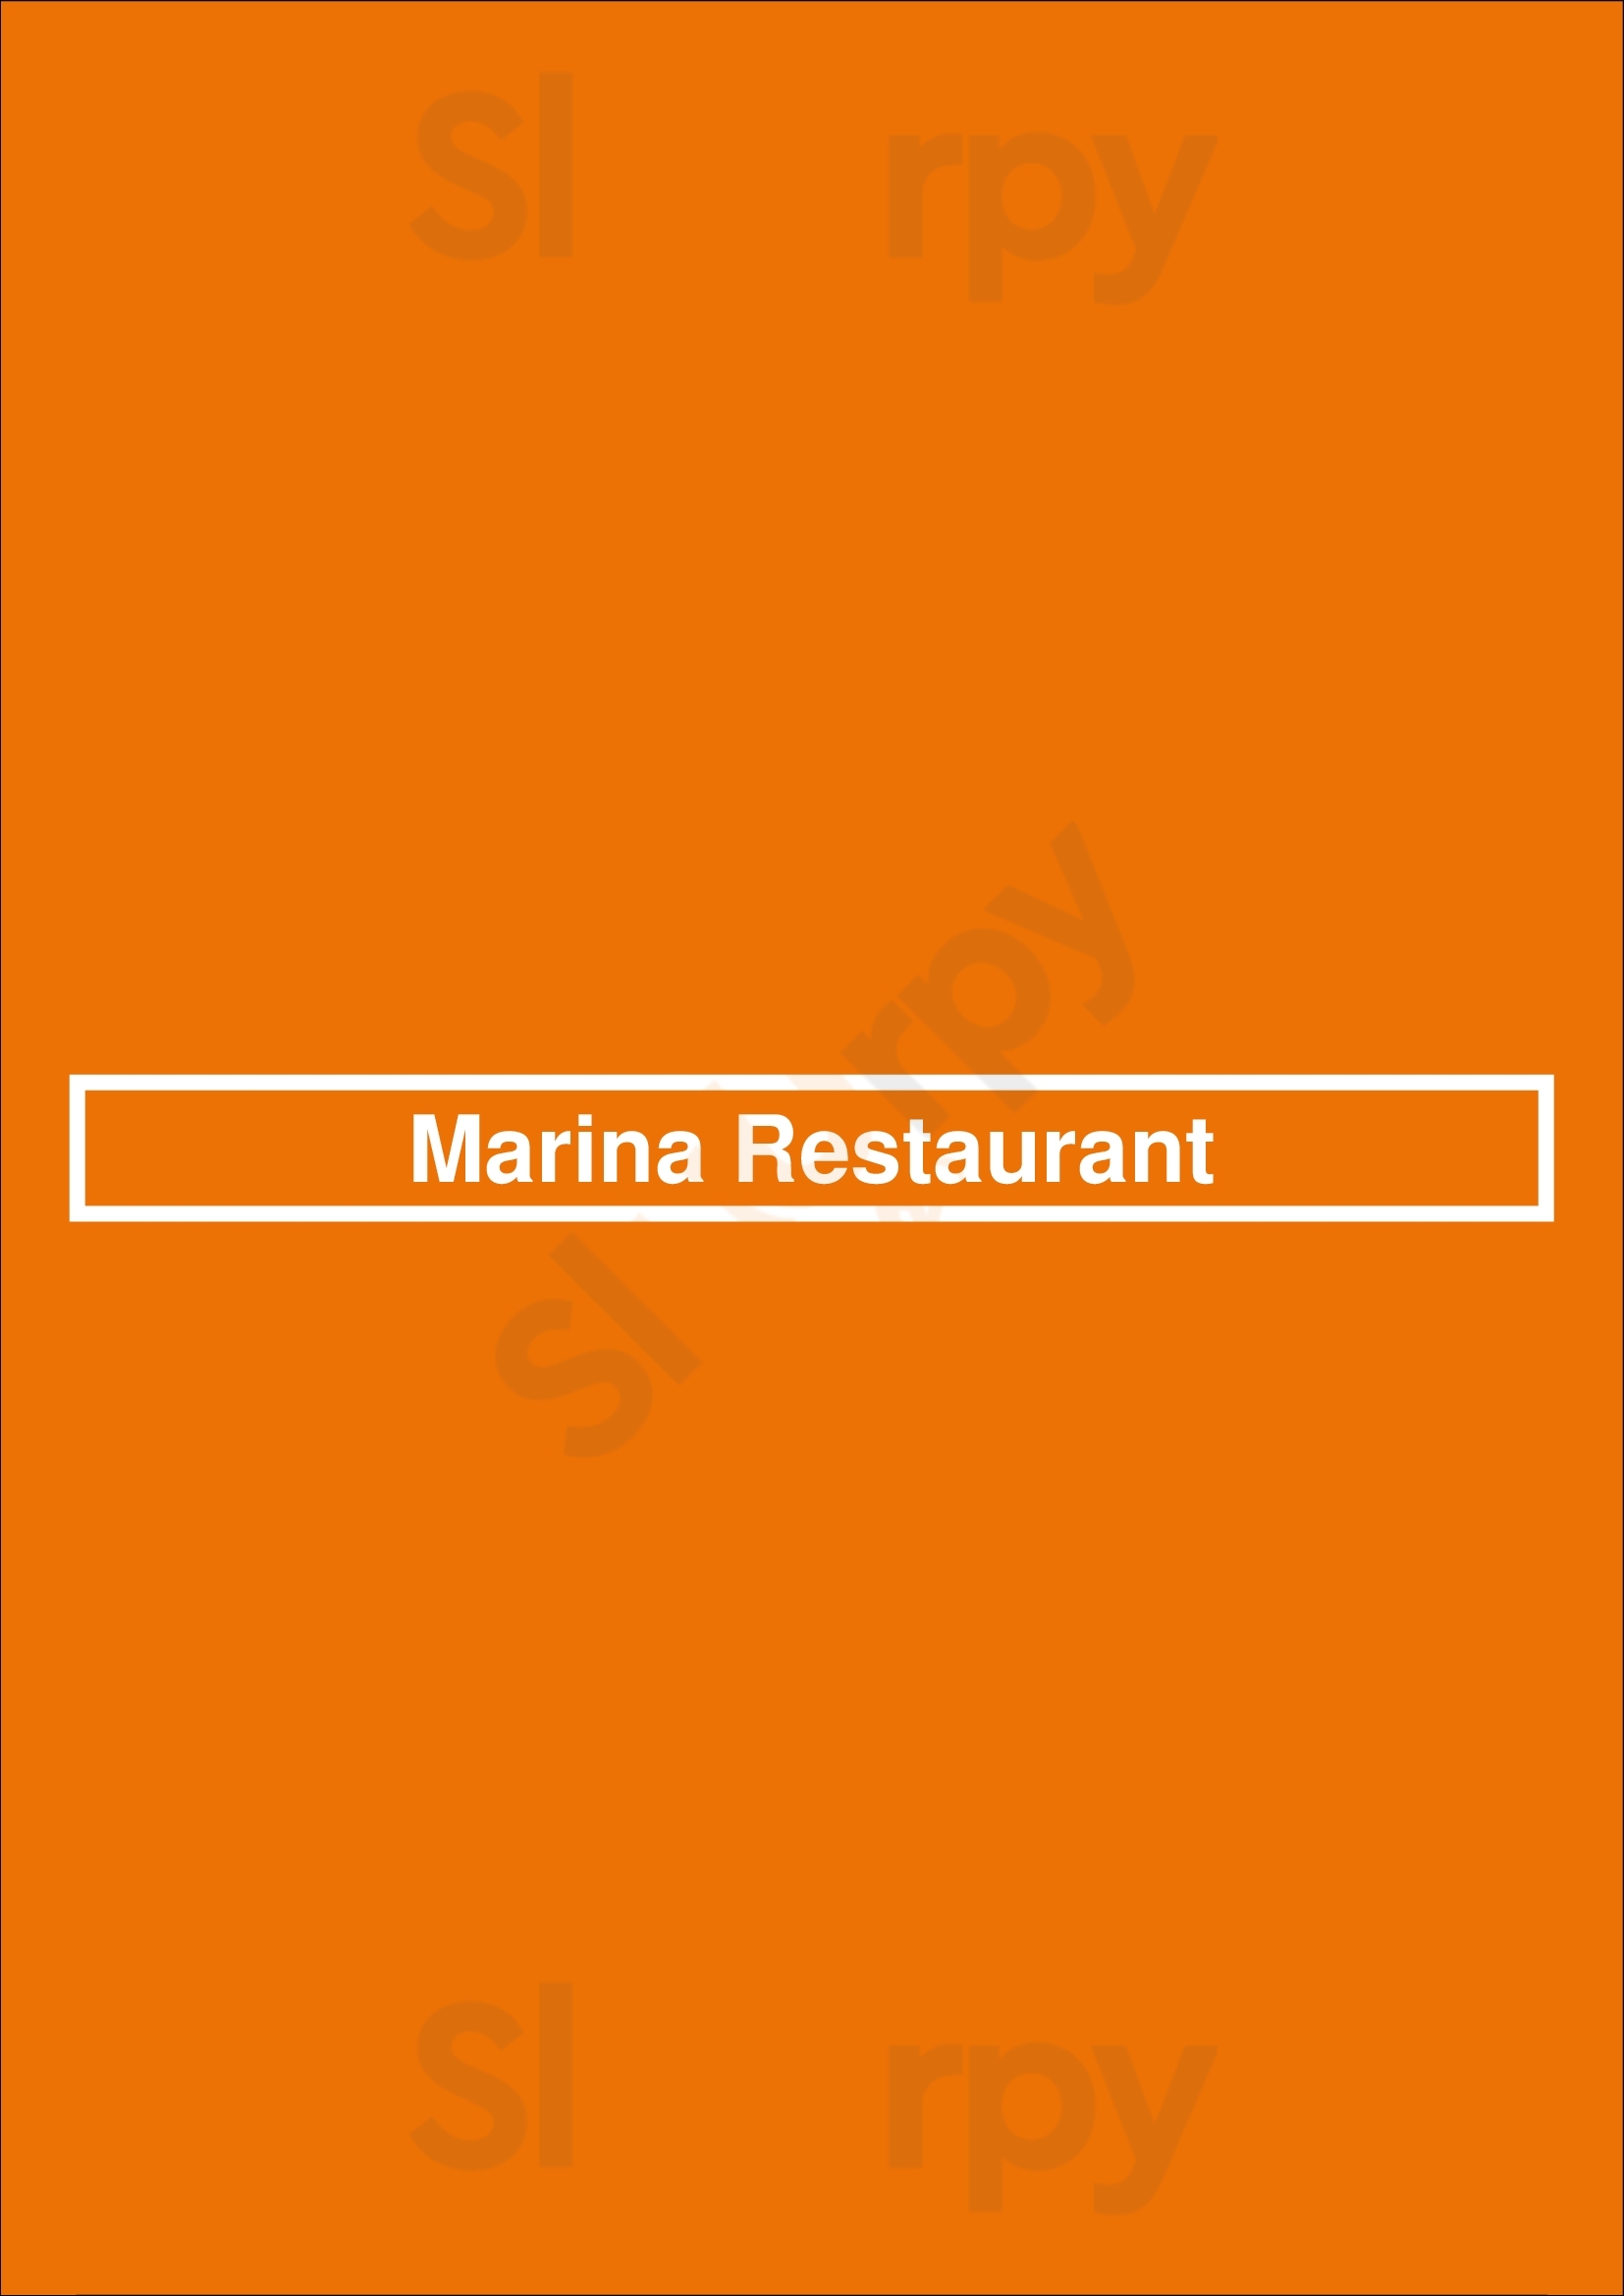 Marina Restaurant Vancouver Island Menu - 1